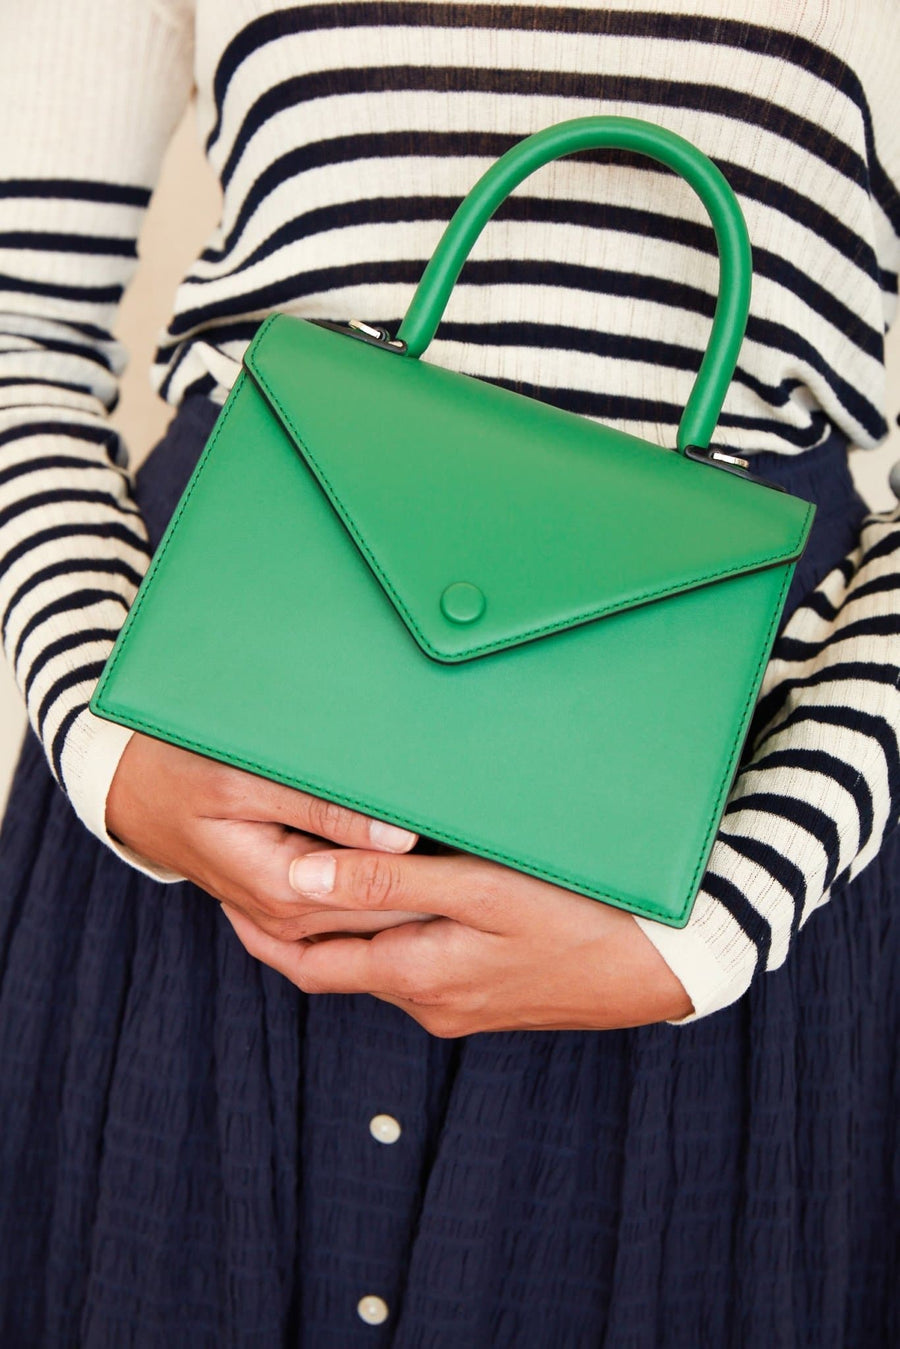 Bags - OAD NEW YORK - Designer Handbags and more